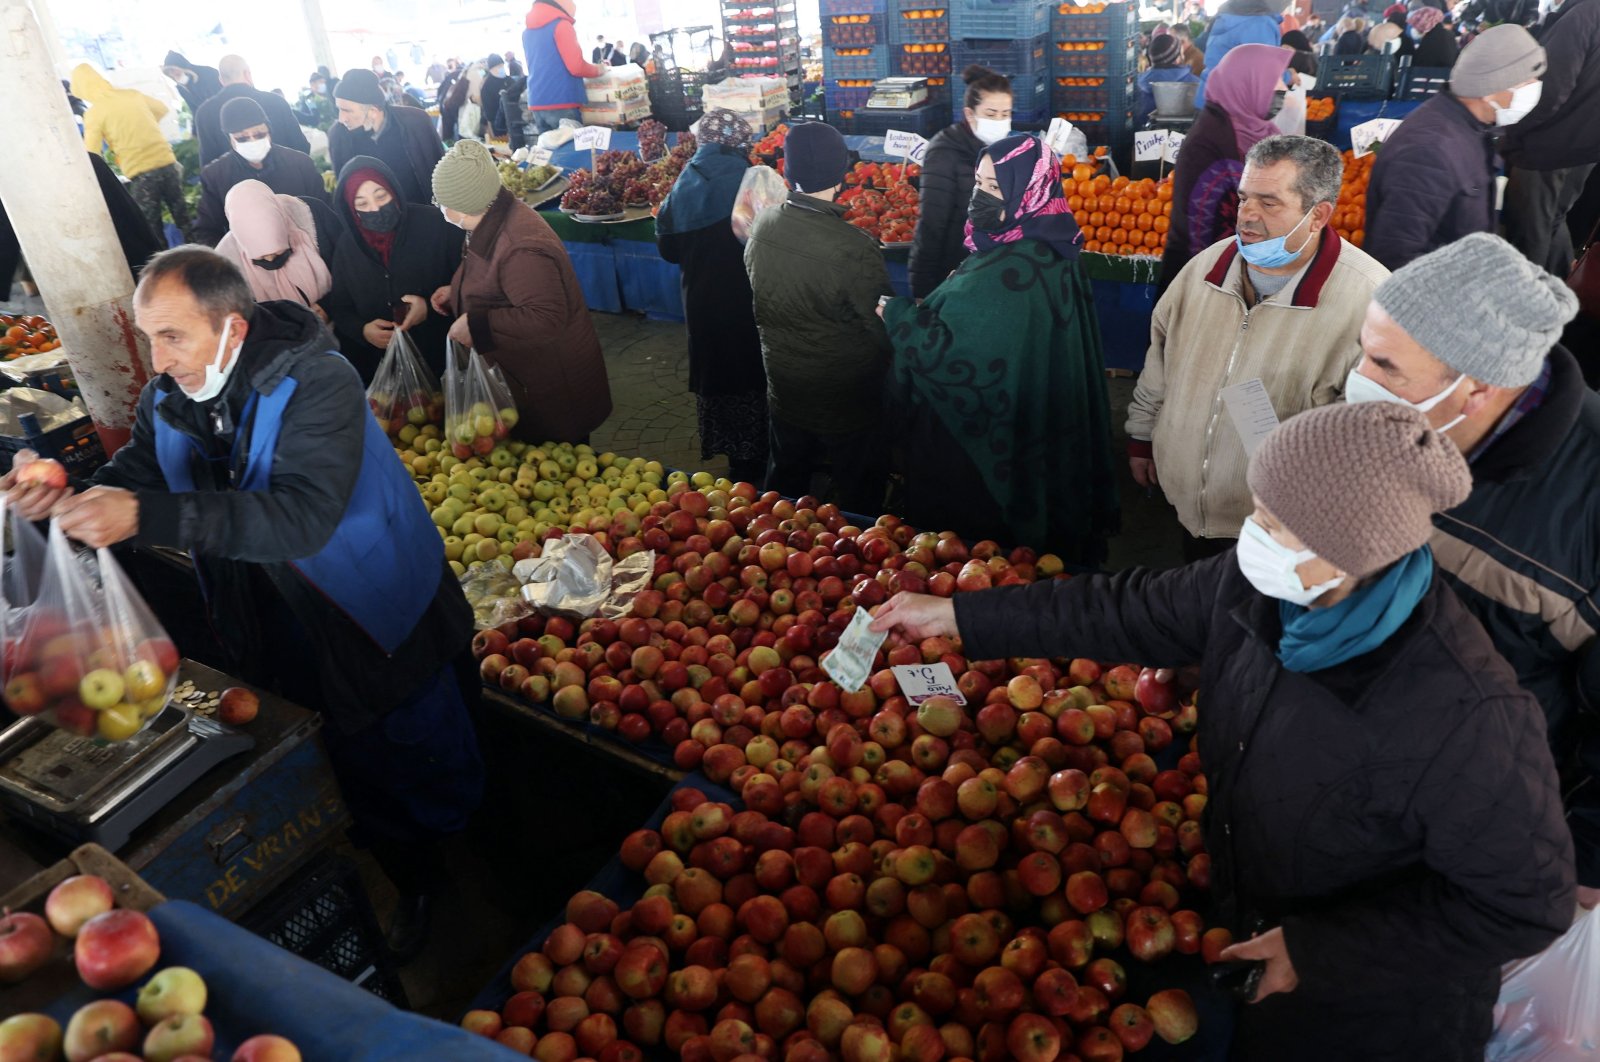 People shop at an open market in Ankara, Turkey, Feb. 4, 2022. (AFP Photo)